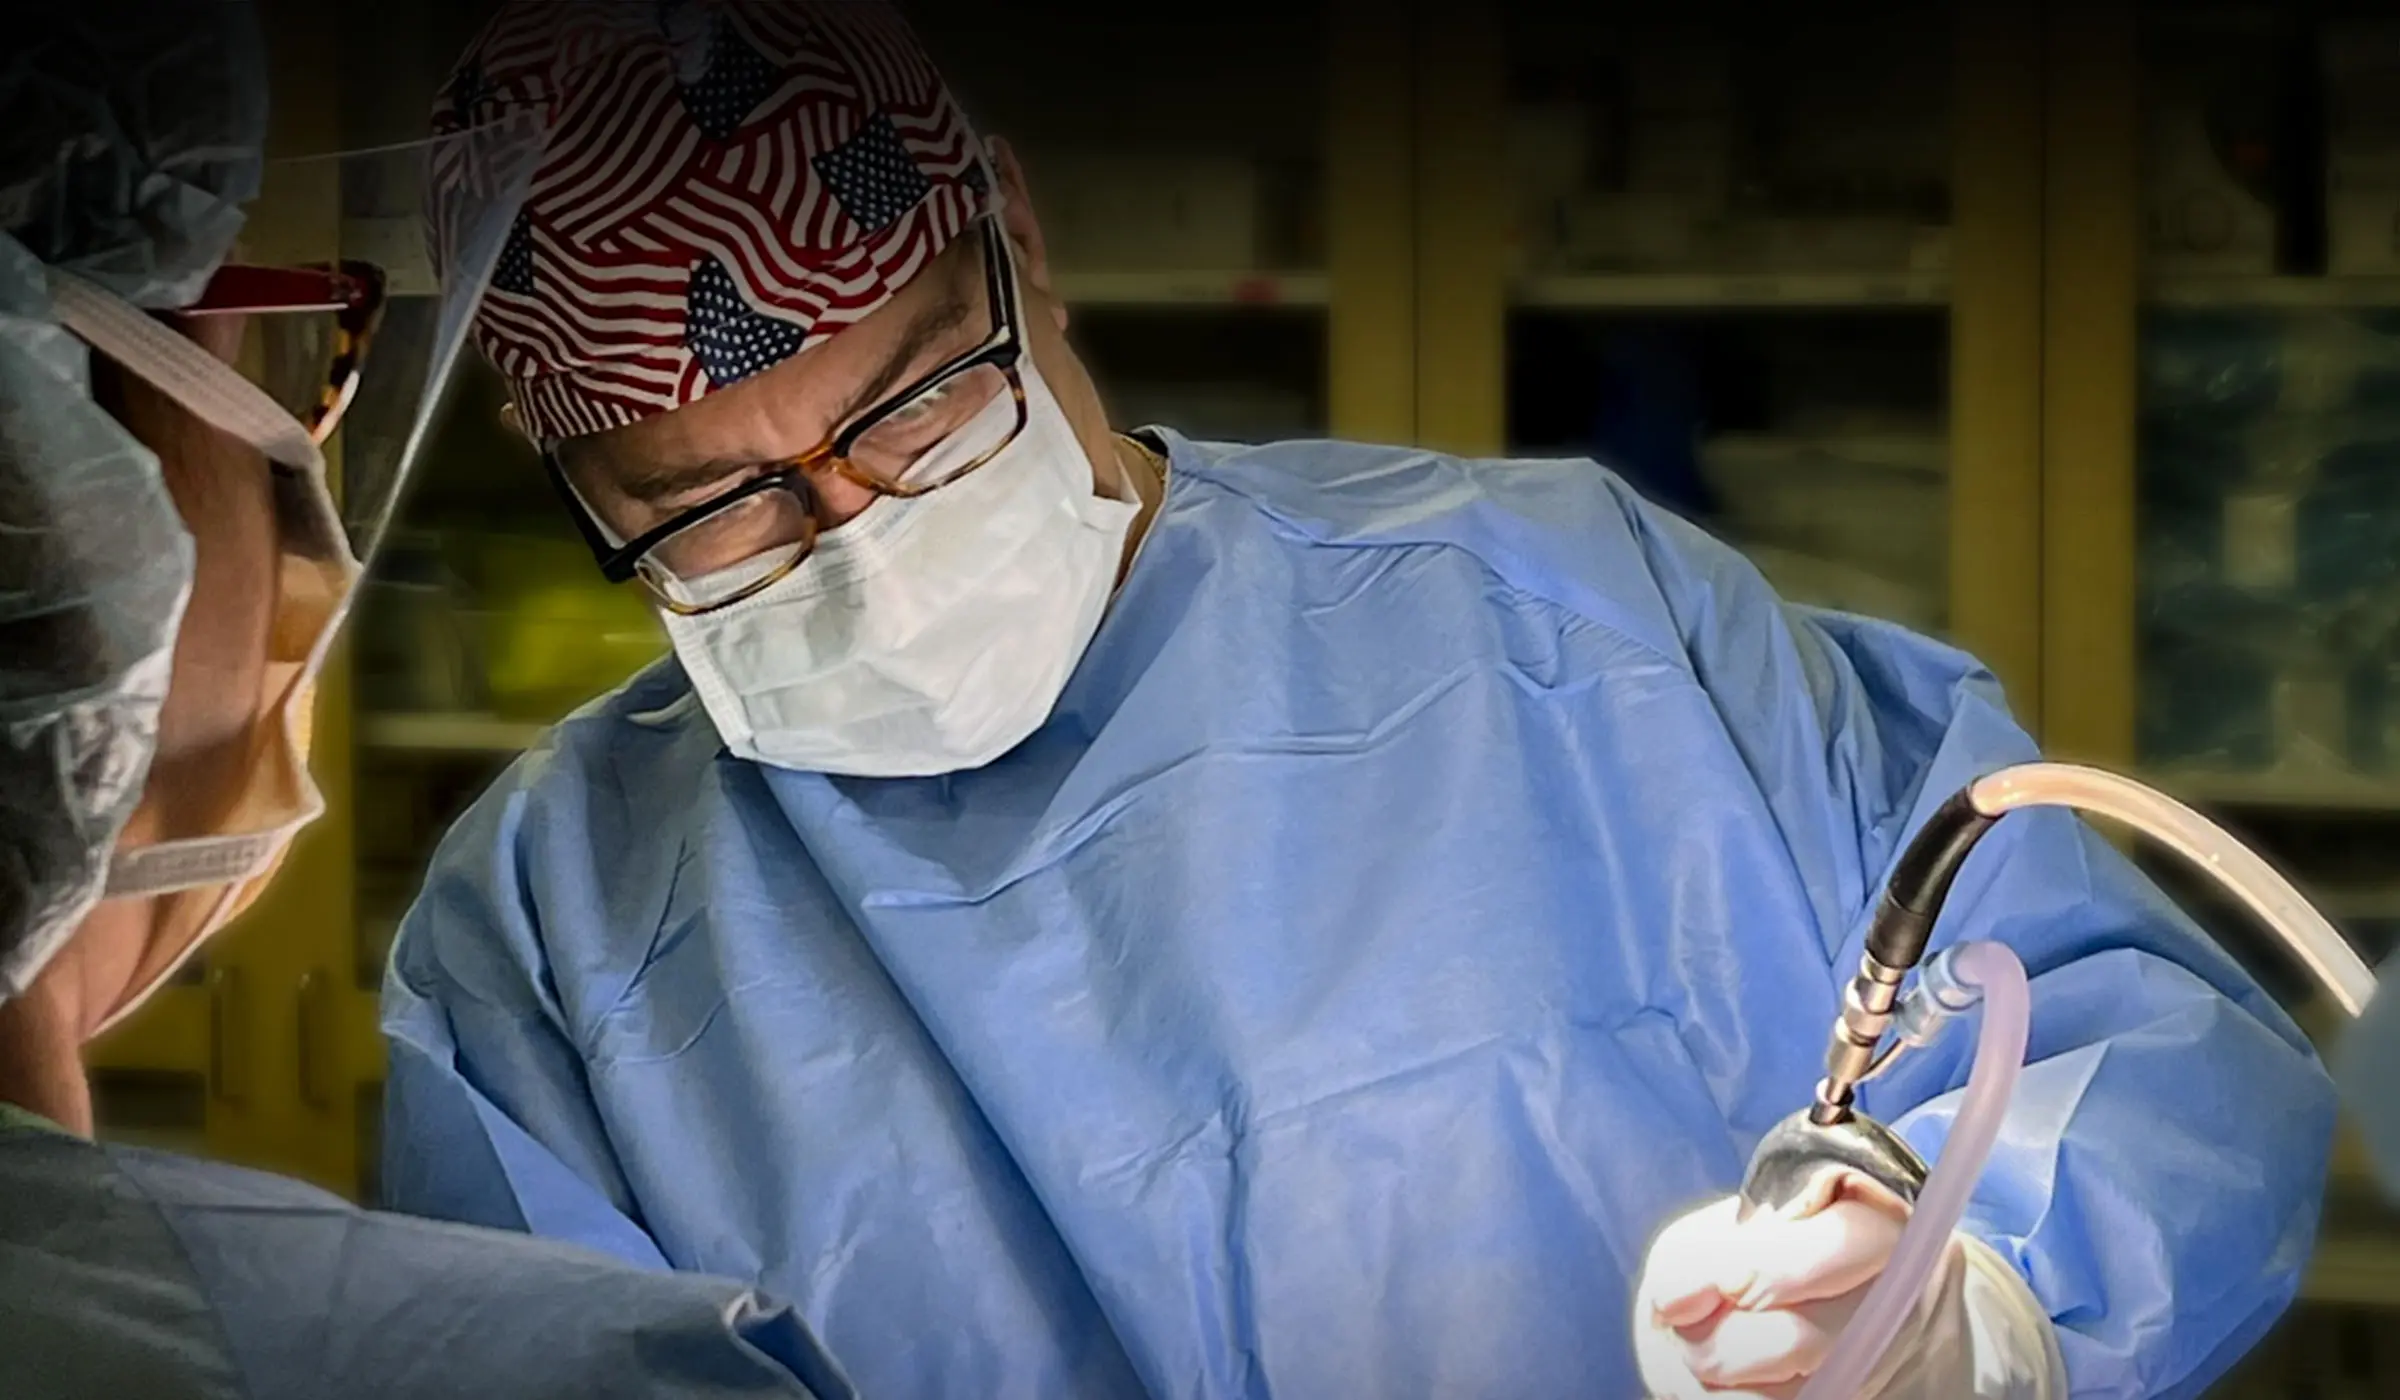 Philadelphia Plastic Surgery | Board-Certified Plastic Surgeon Dr. Sorokin